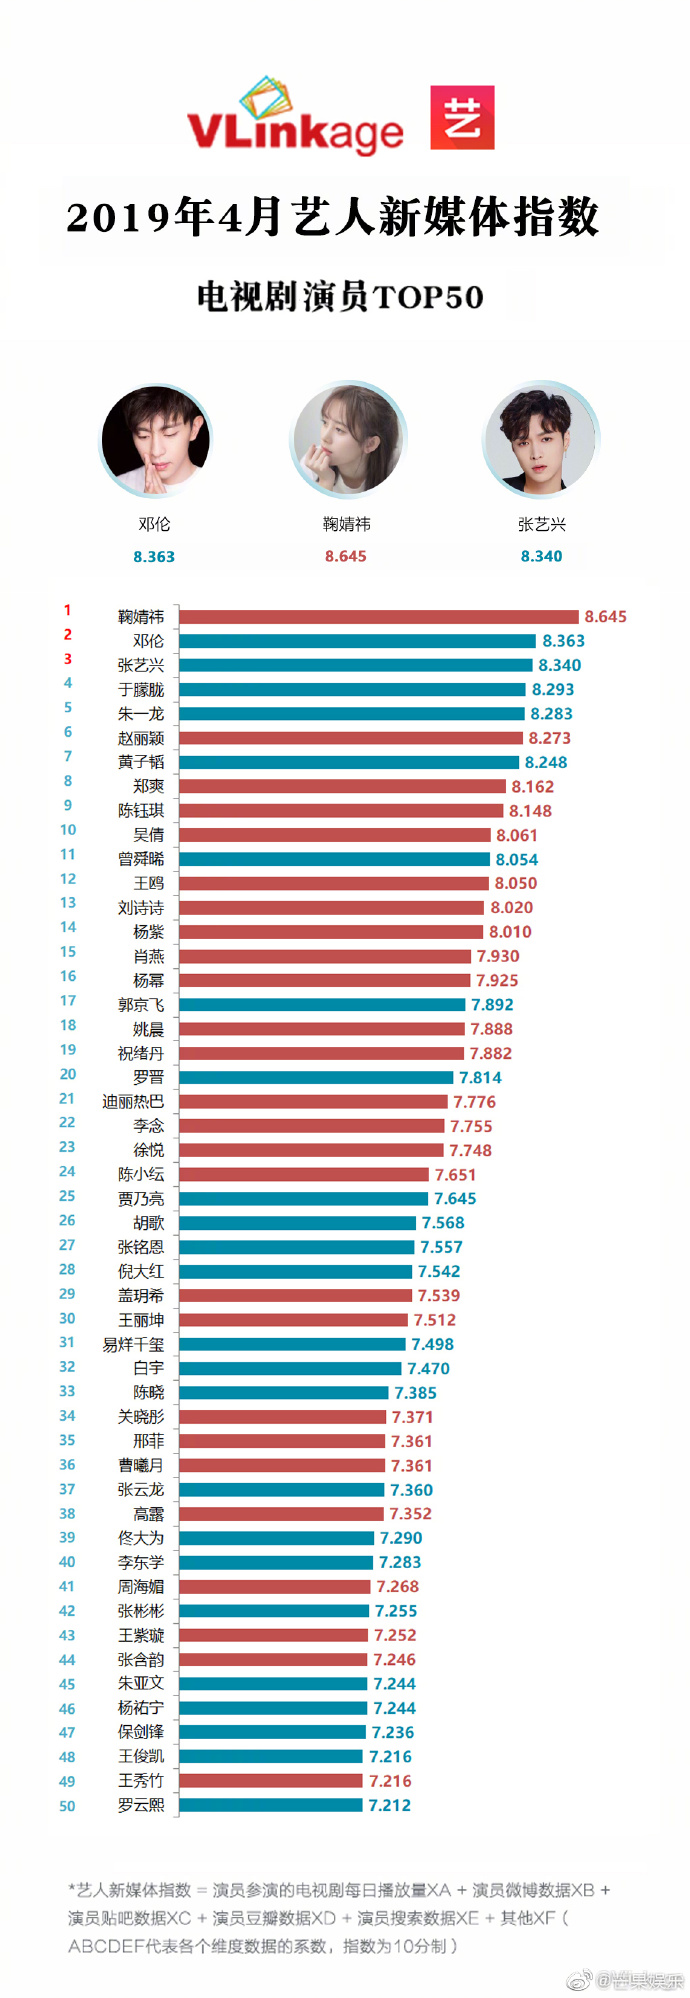 TOP 50 Chinese Artist Media Index – April 2019 (Vlinkage)